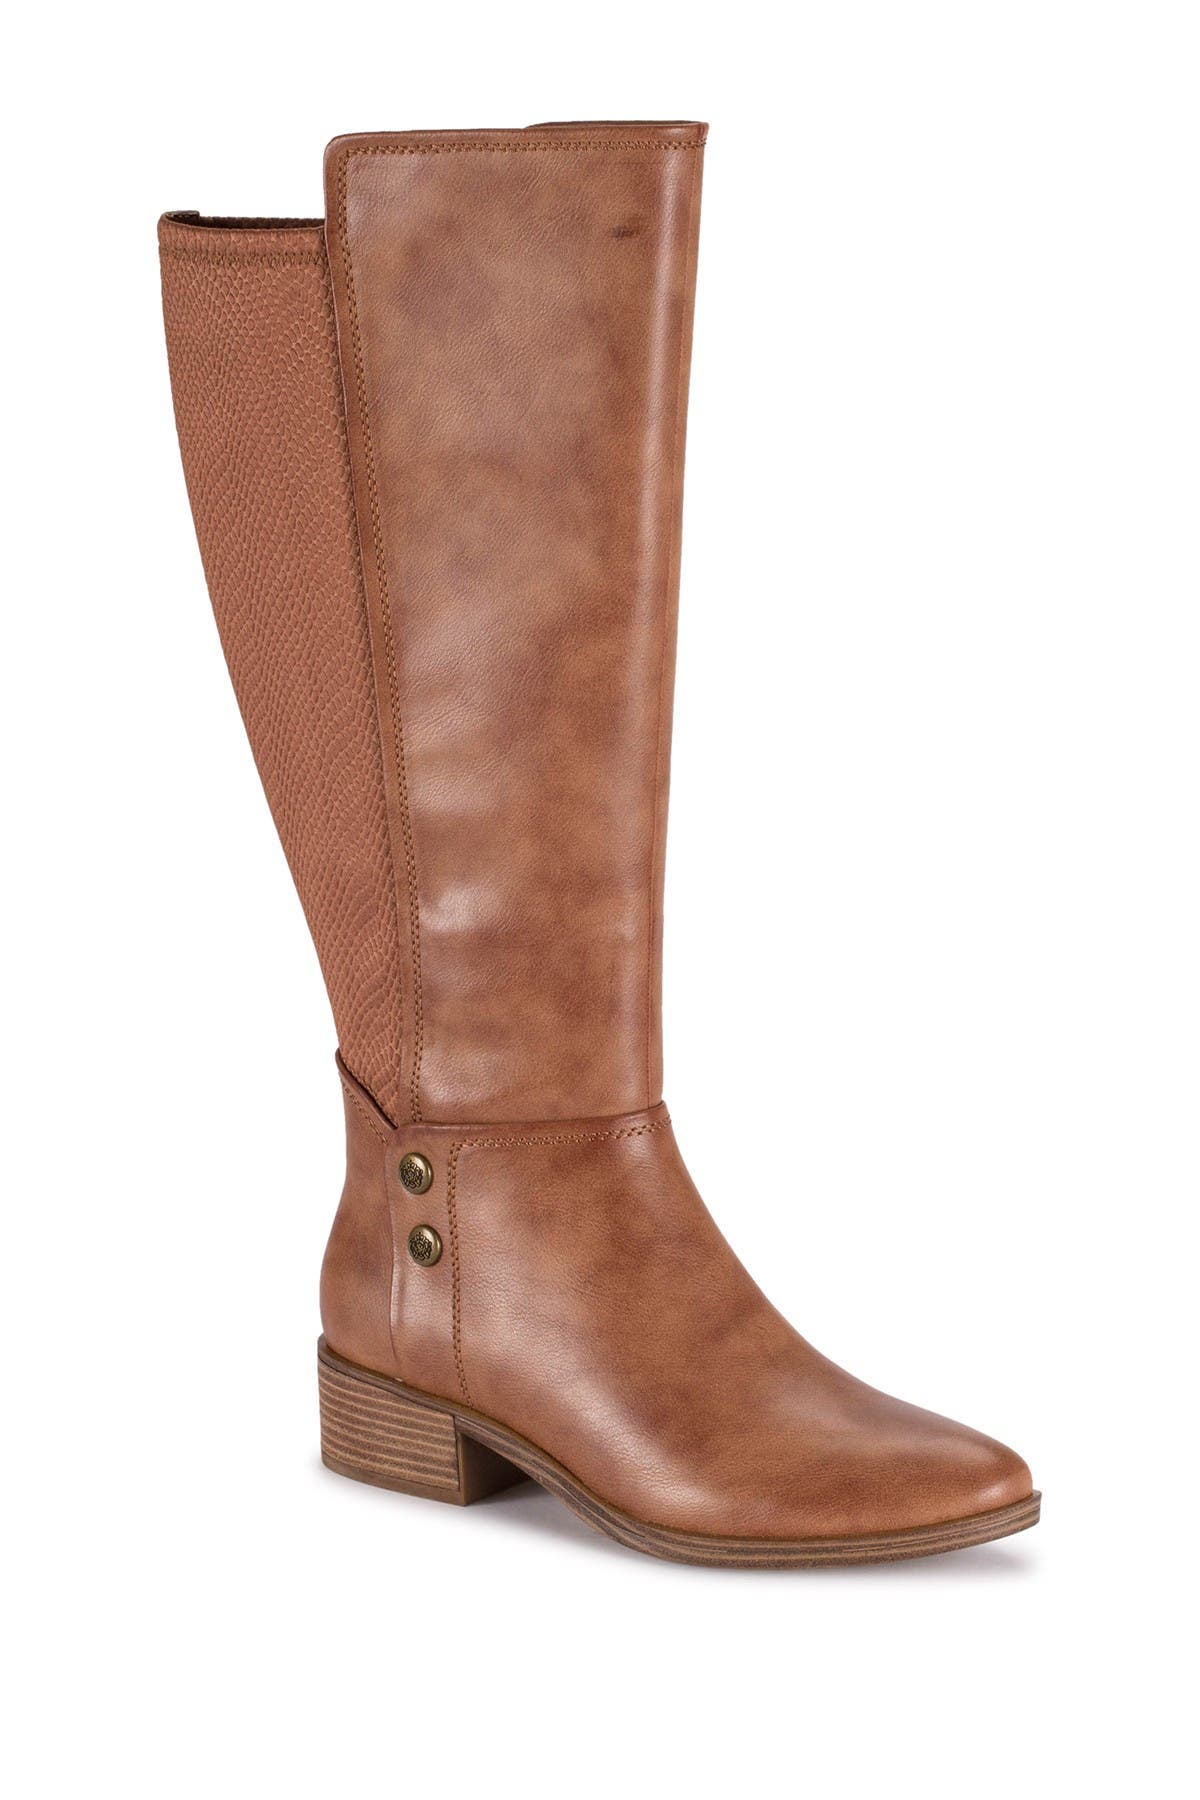 sociology women's wide calf buckle boots